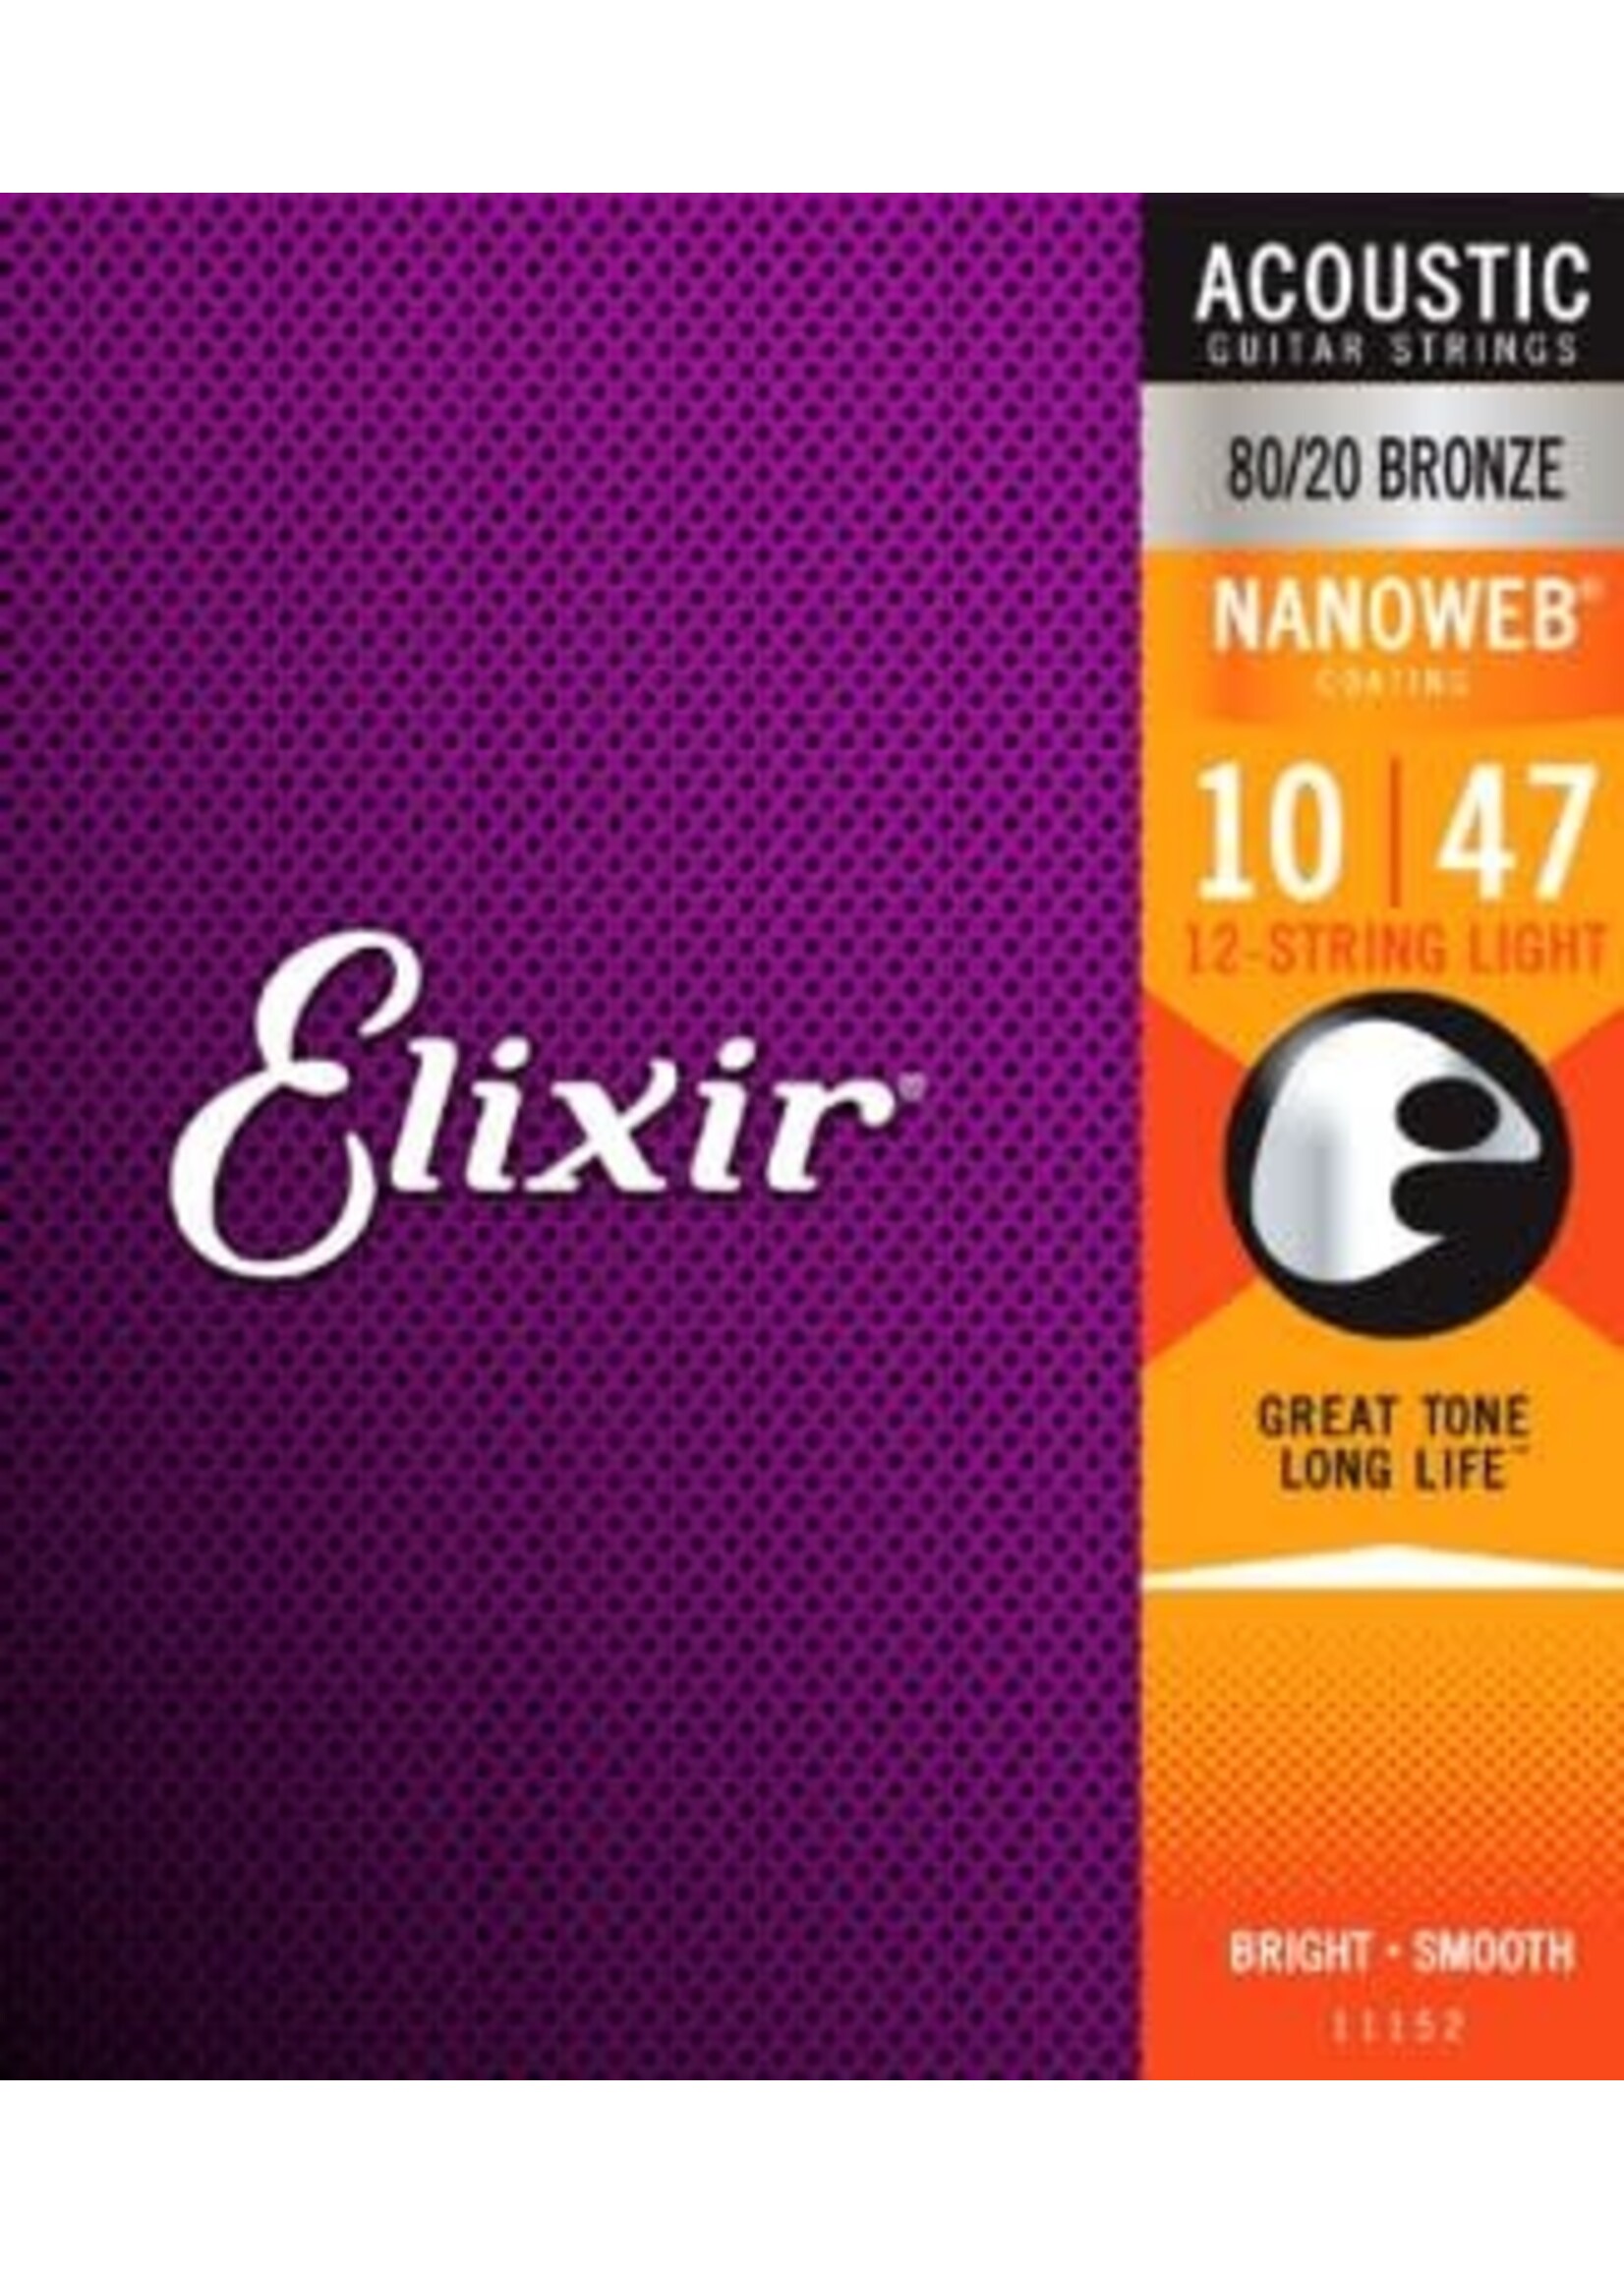 Elixir Elixir 11152 80/20 Bronze Nanoweb Light Acoustic 12-String, 10-47 Gauge